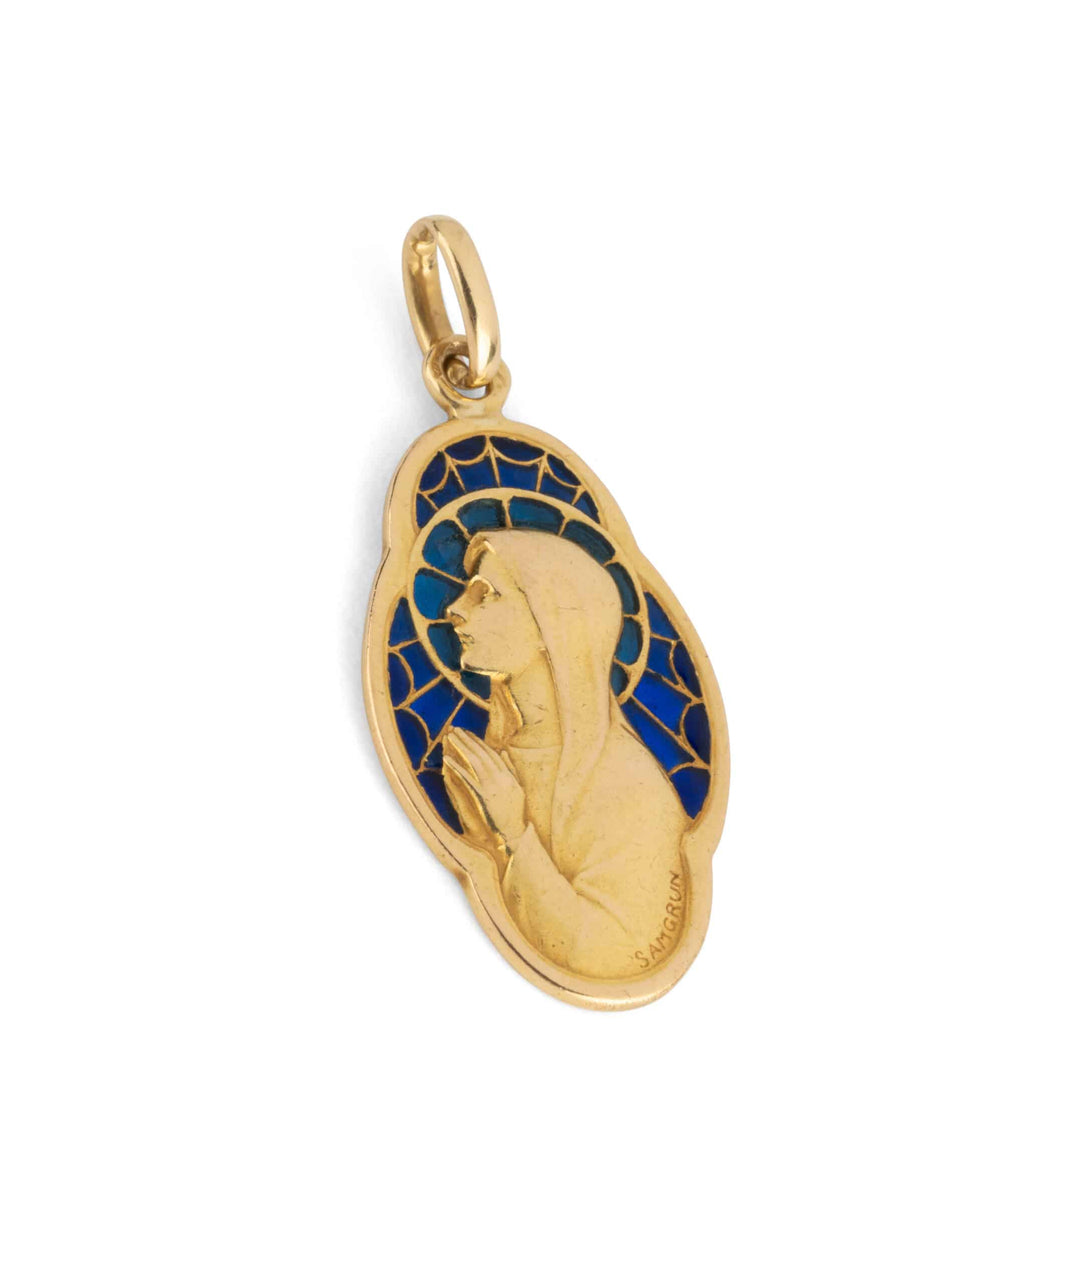 Caillou Paris Medaille Art Nouveau Email Signee Samgrun Yera Profil